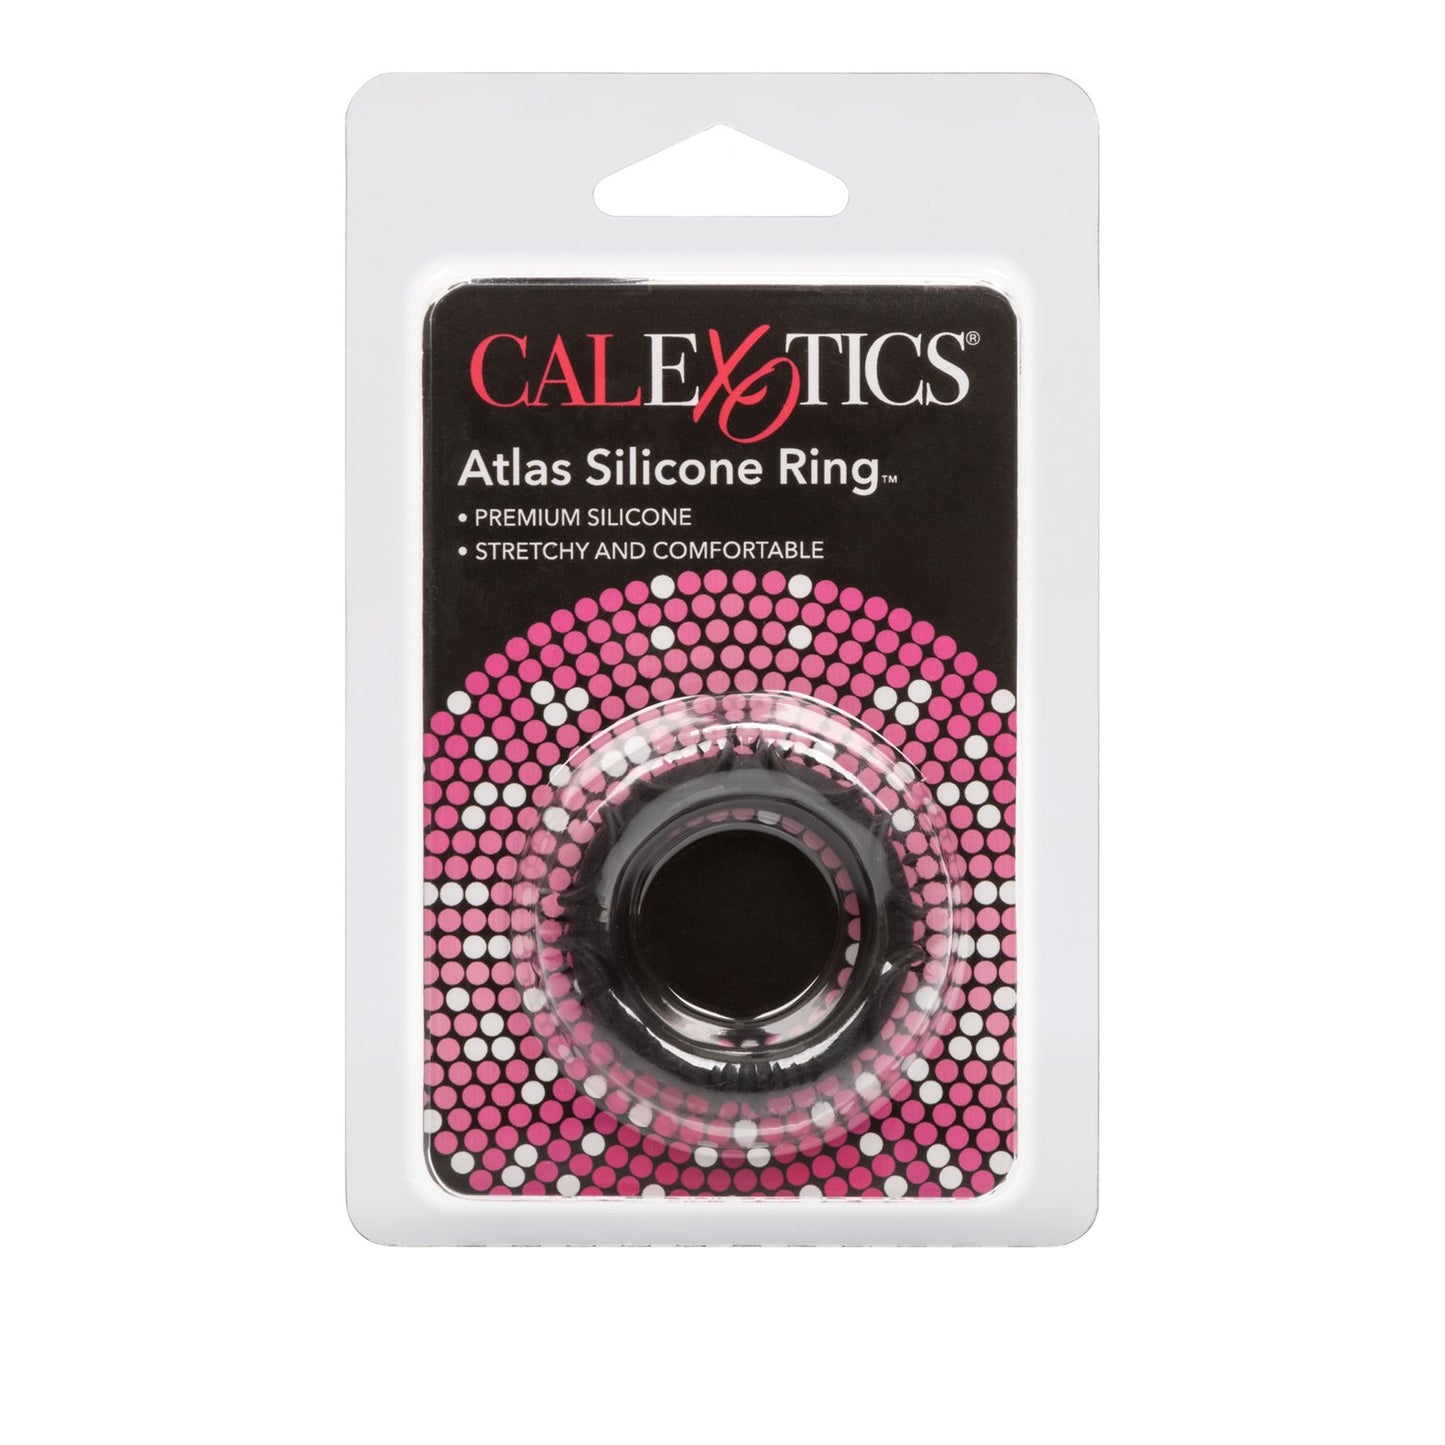 Atlas Silicone Ring